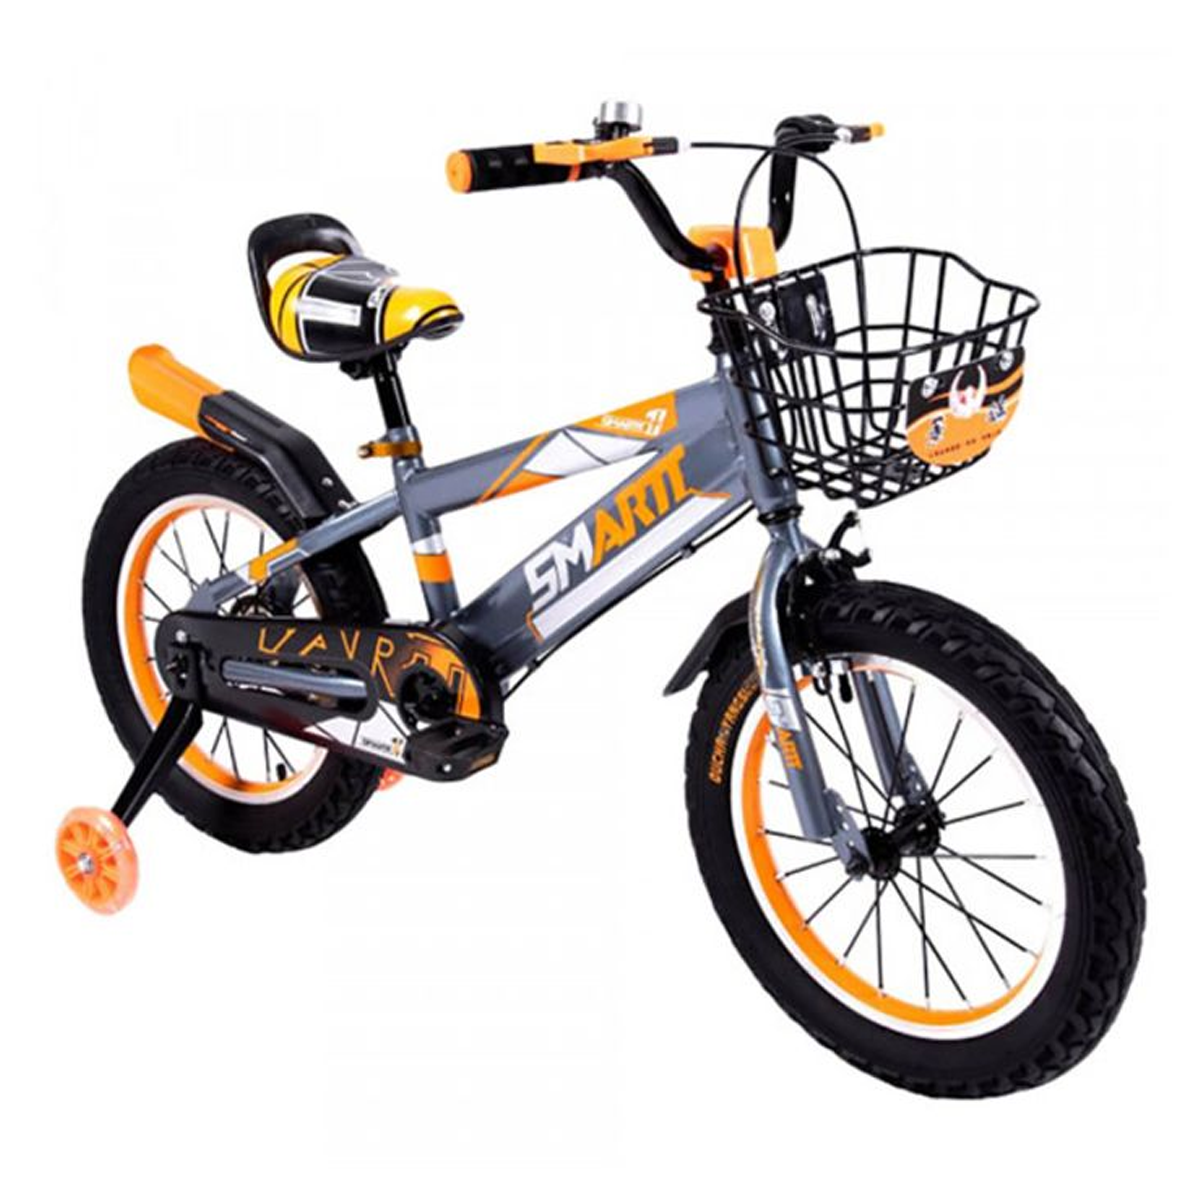 DESERT STAR Smart Kids Bicycle , Orange 14inch